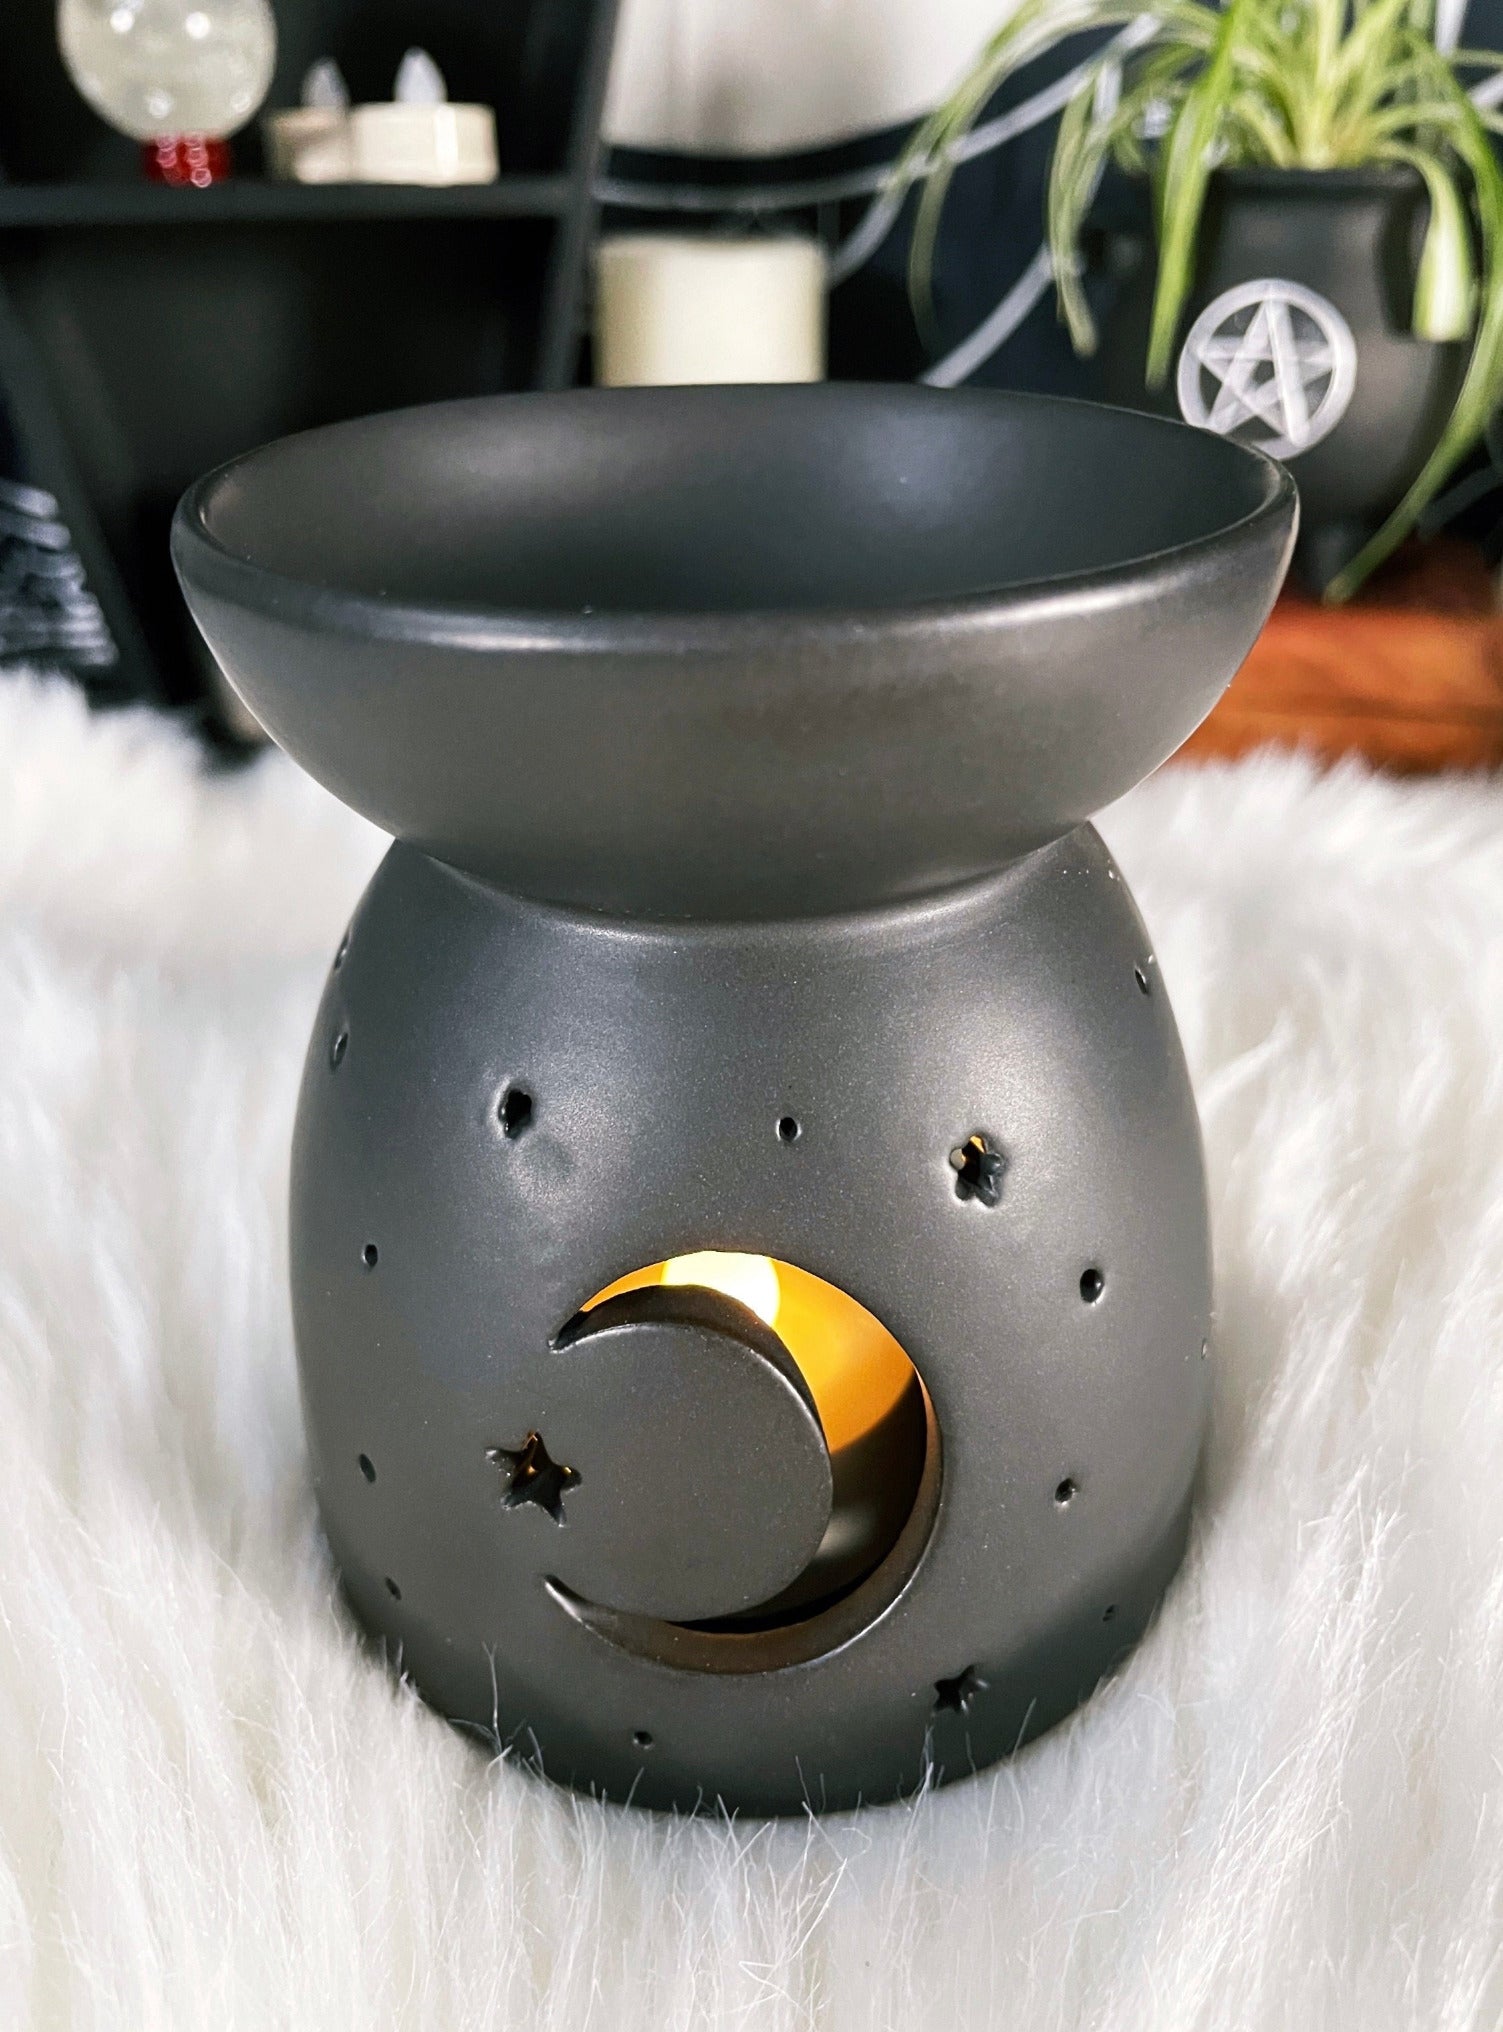 A black ceramic oil burner / wax melt burner with a crescent moon design cut out.